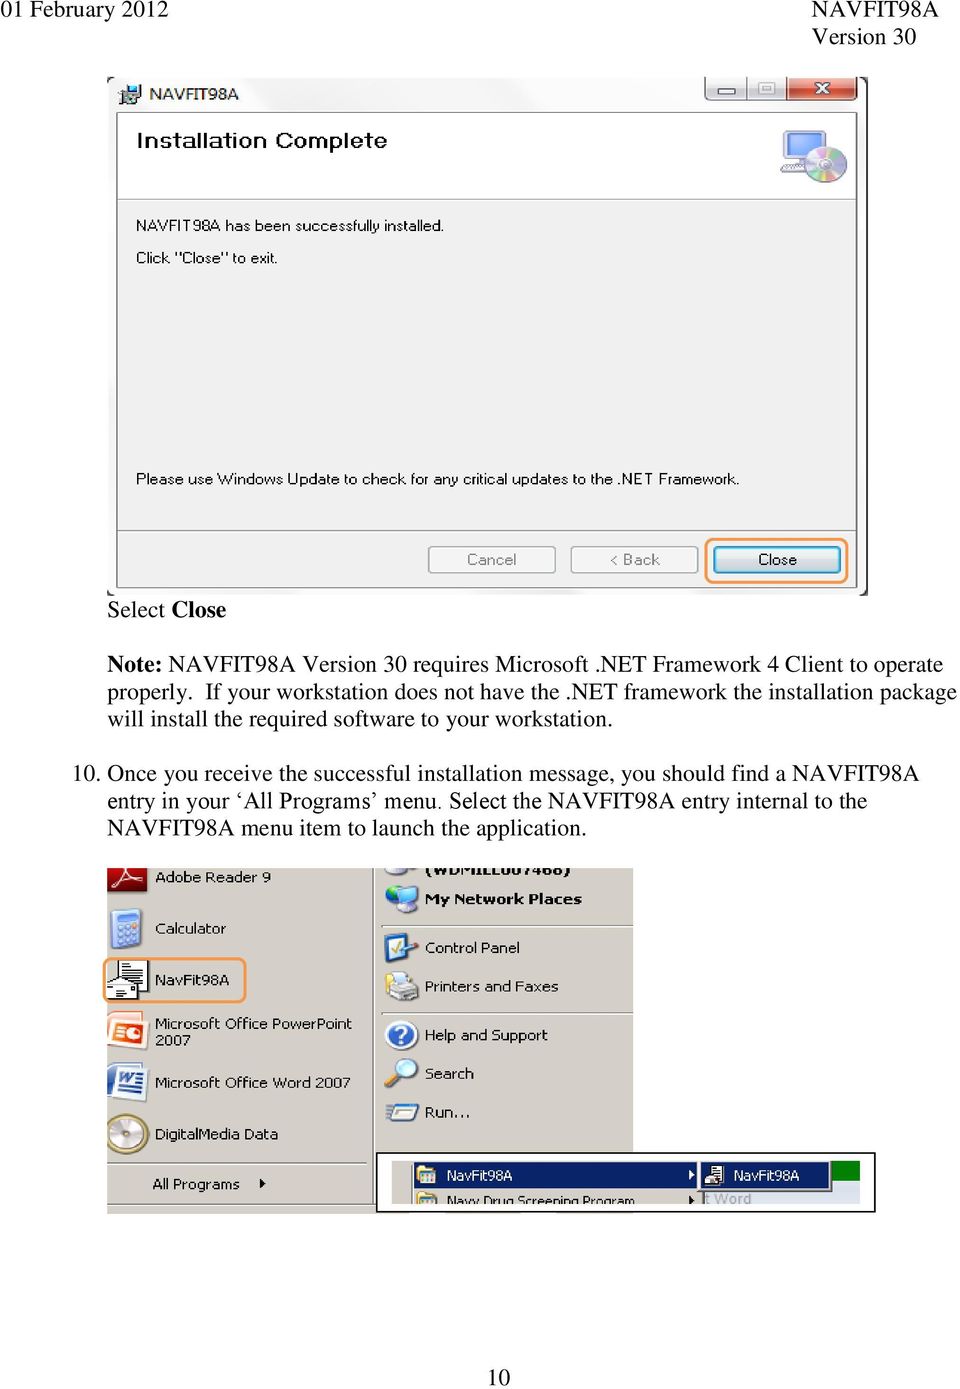 navfit98a pdf for mac